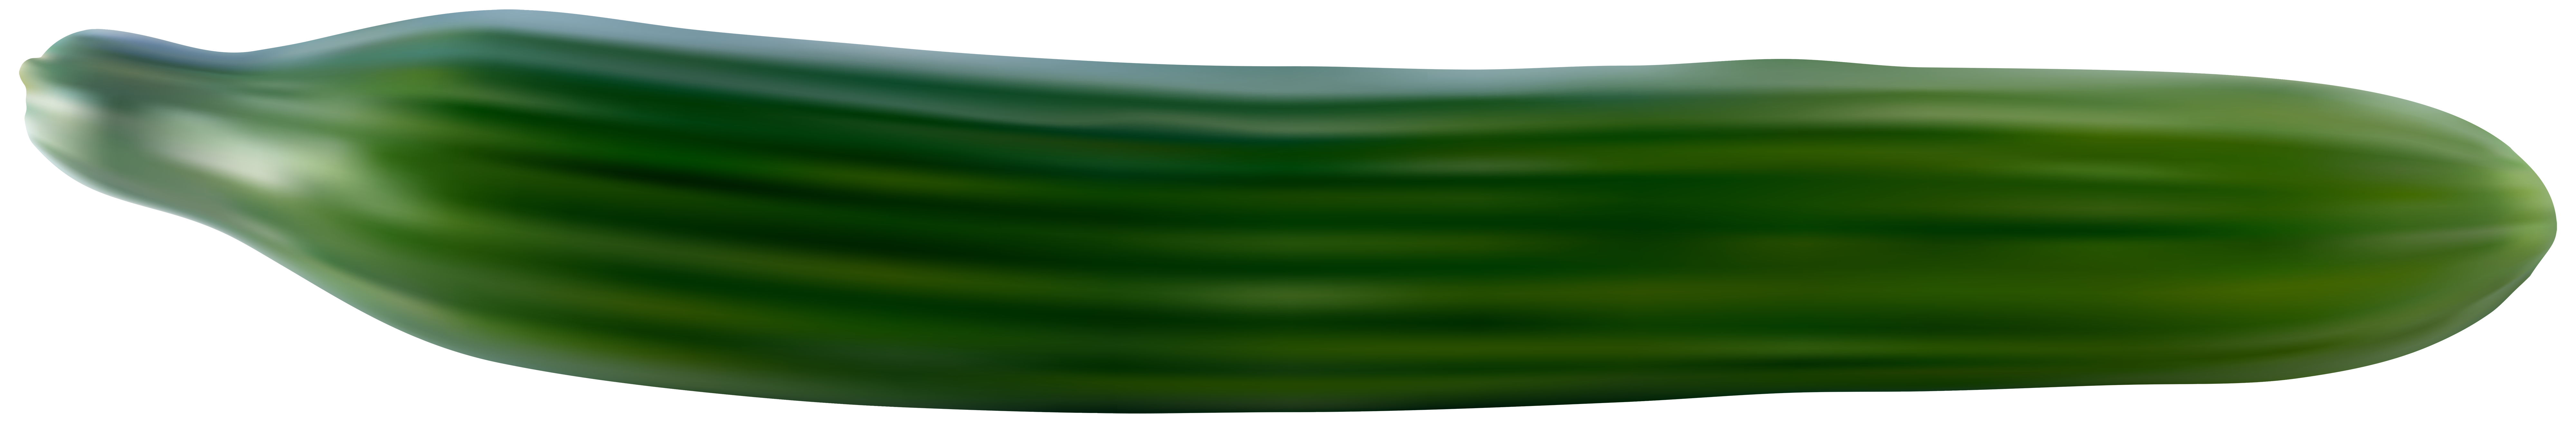 Imagen Transparente PNG de un solo pepino